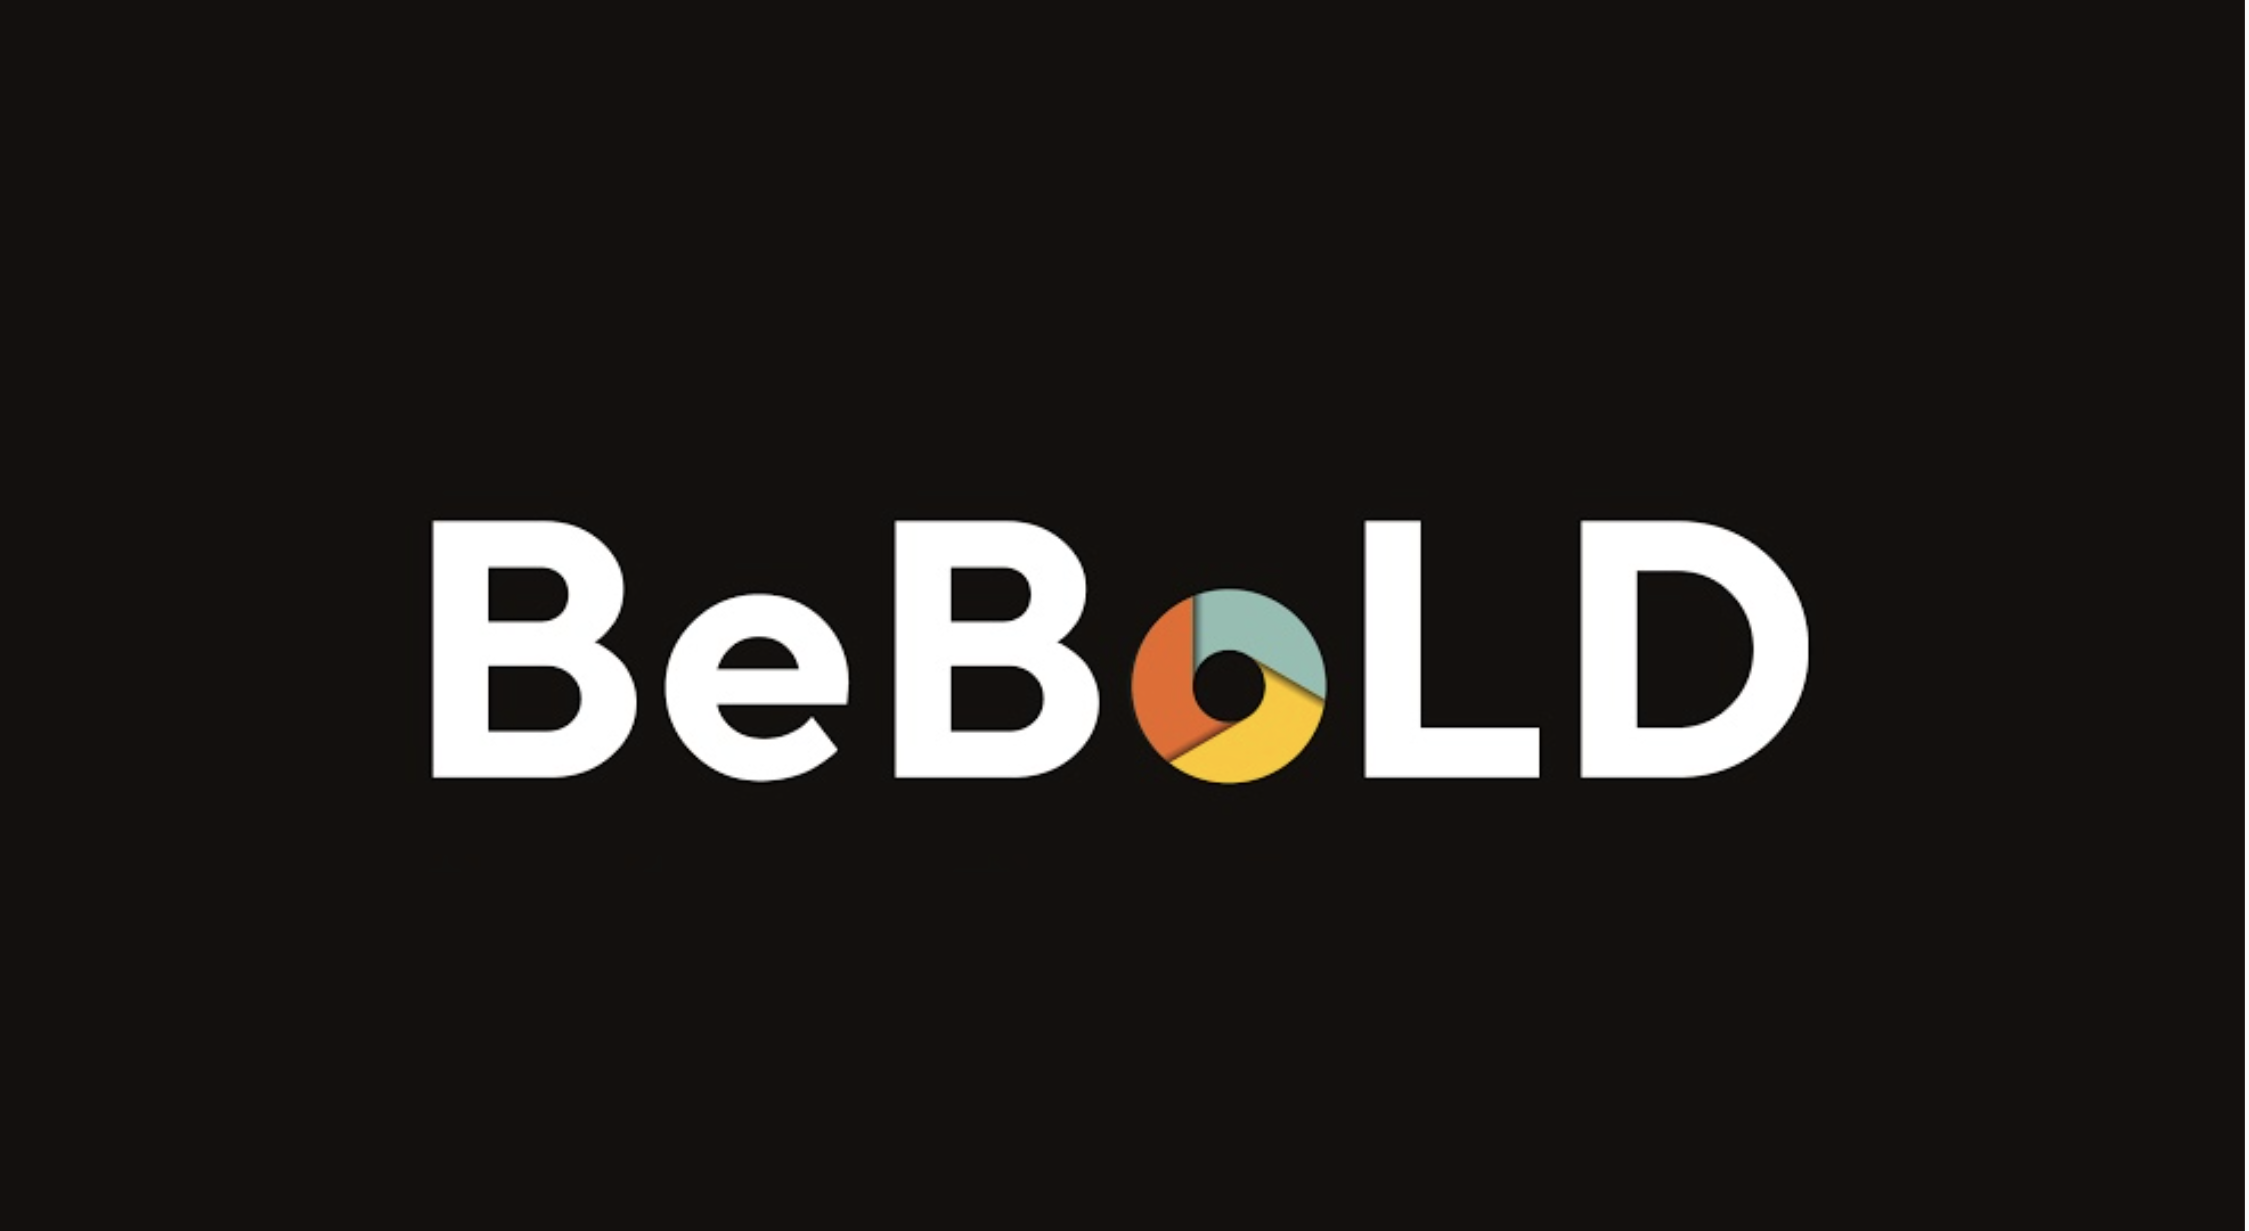 BeBoLD logo